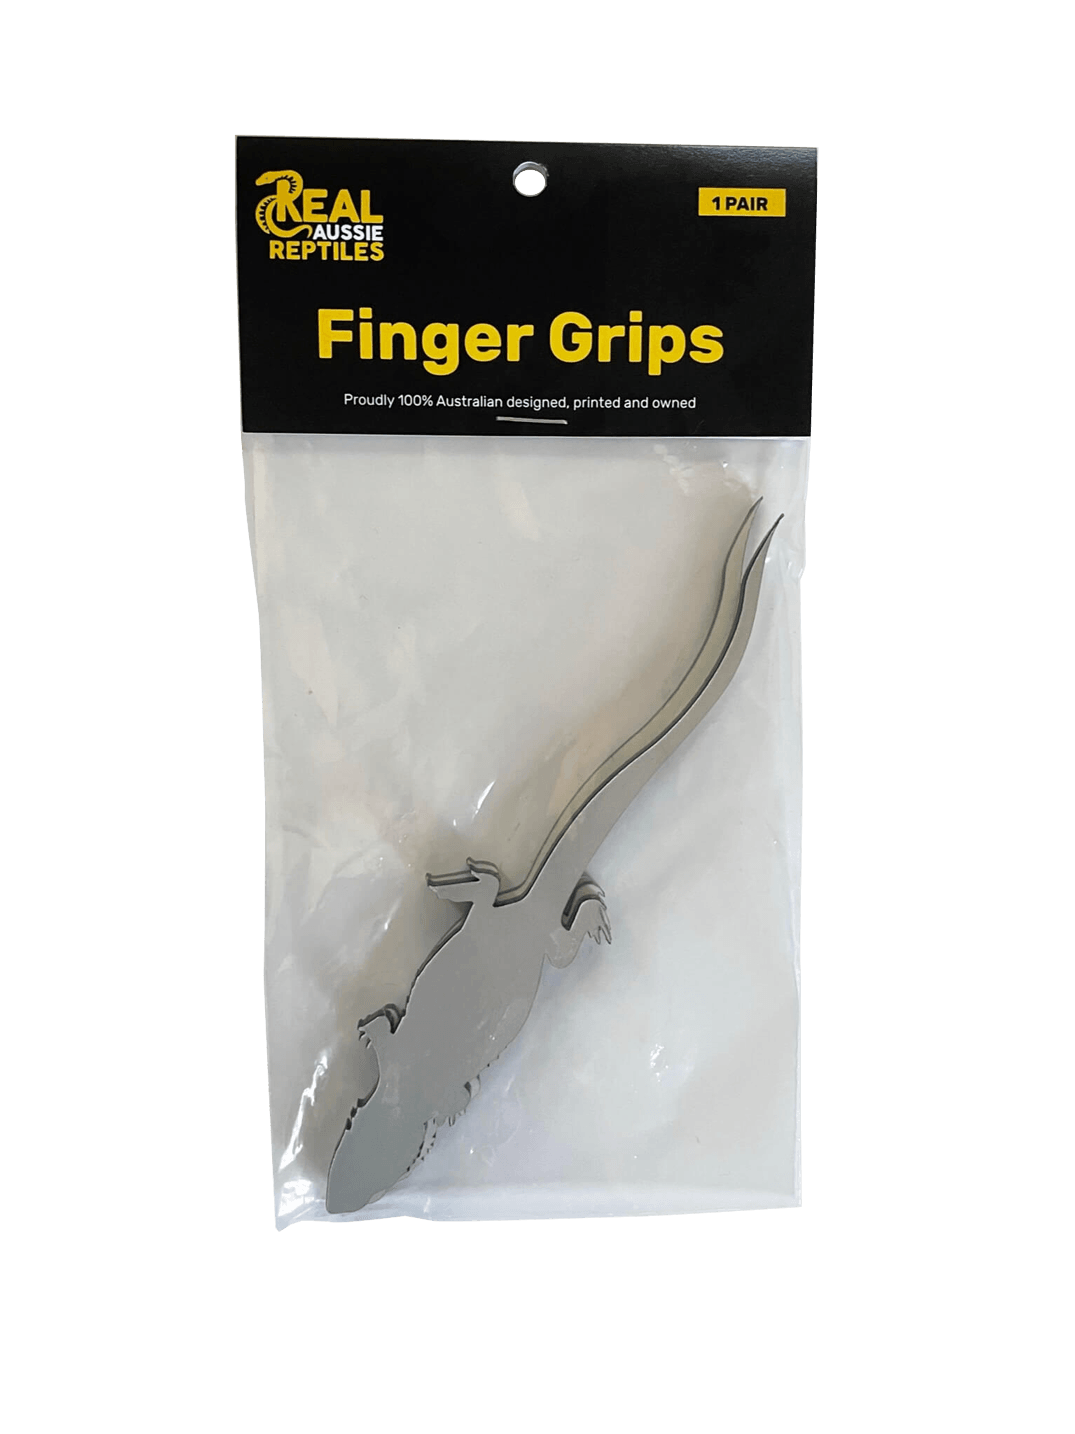 Finger Grip in packet